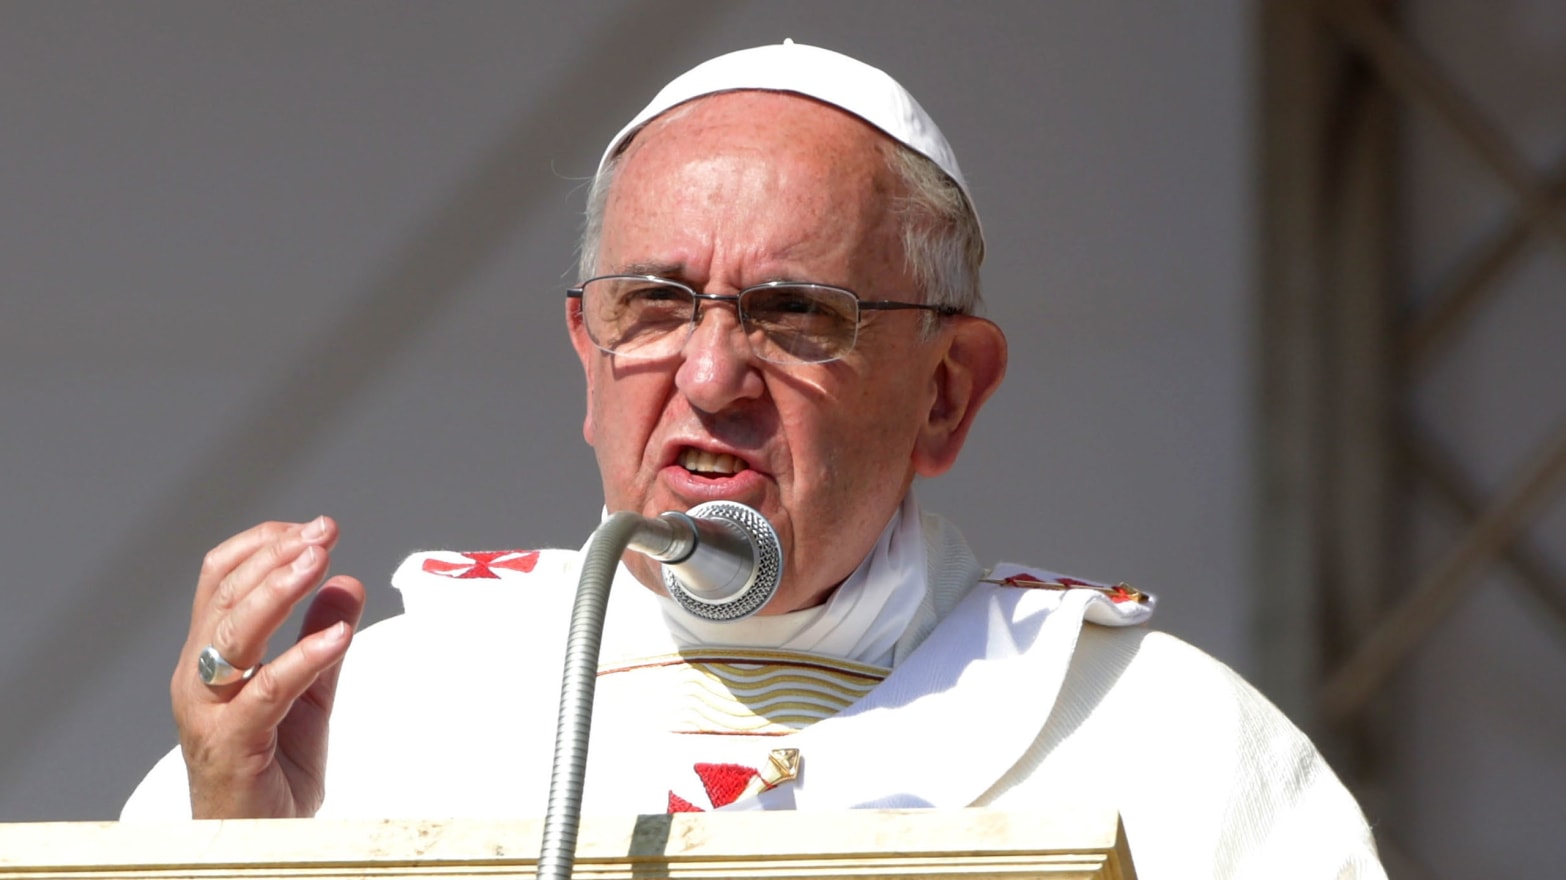 Image result for pope francis nervous